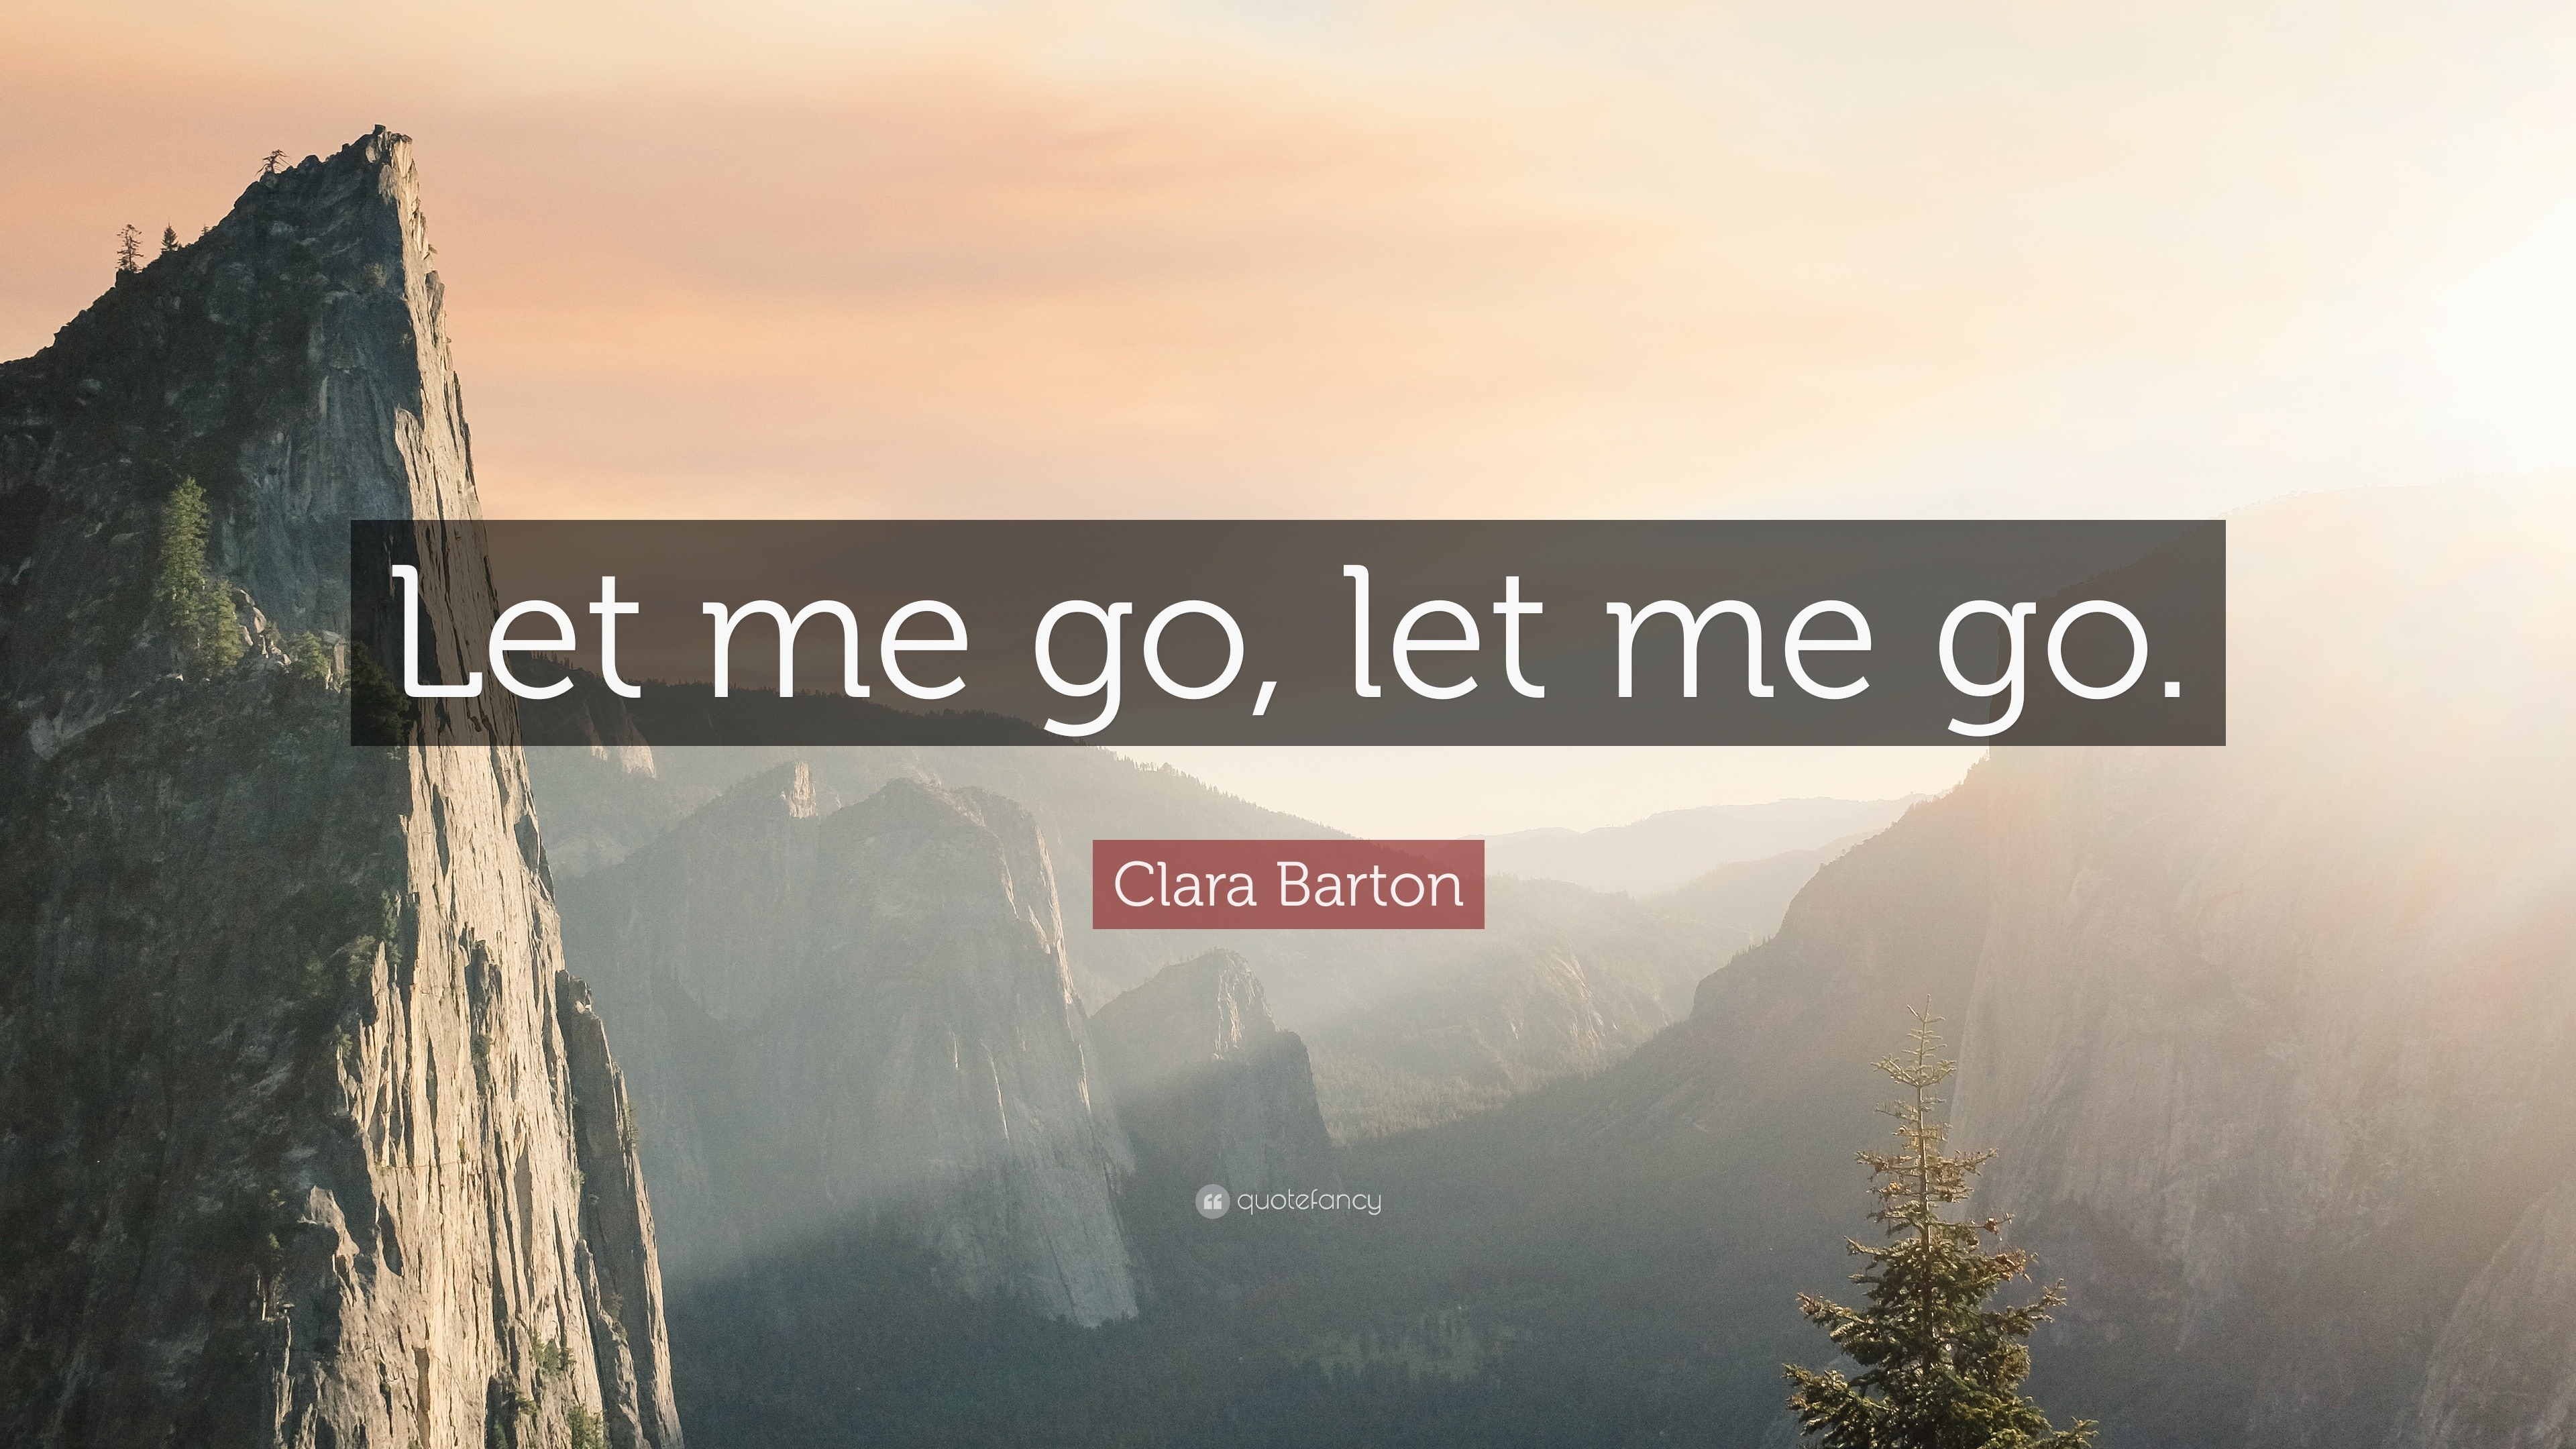 Clara Barton Quote: "Let me go, let me go." (9 wallpapers ...